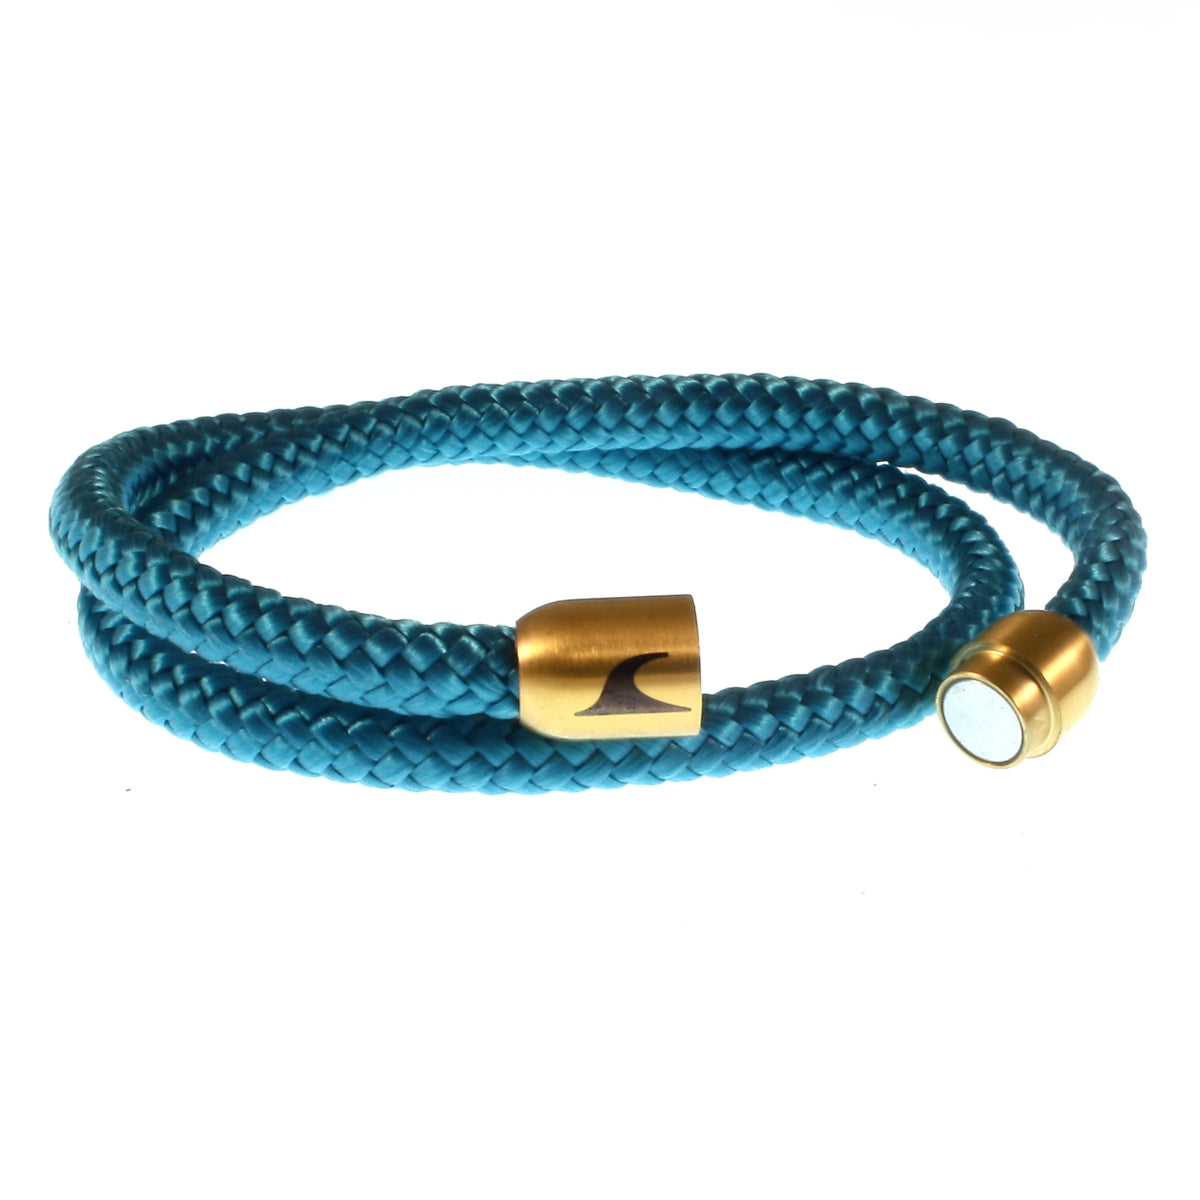 Herren-Segeltau-Armband-damen-hawaii-blau-gold-Edelstahlverschluss-offen-wavepirate-shop-st